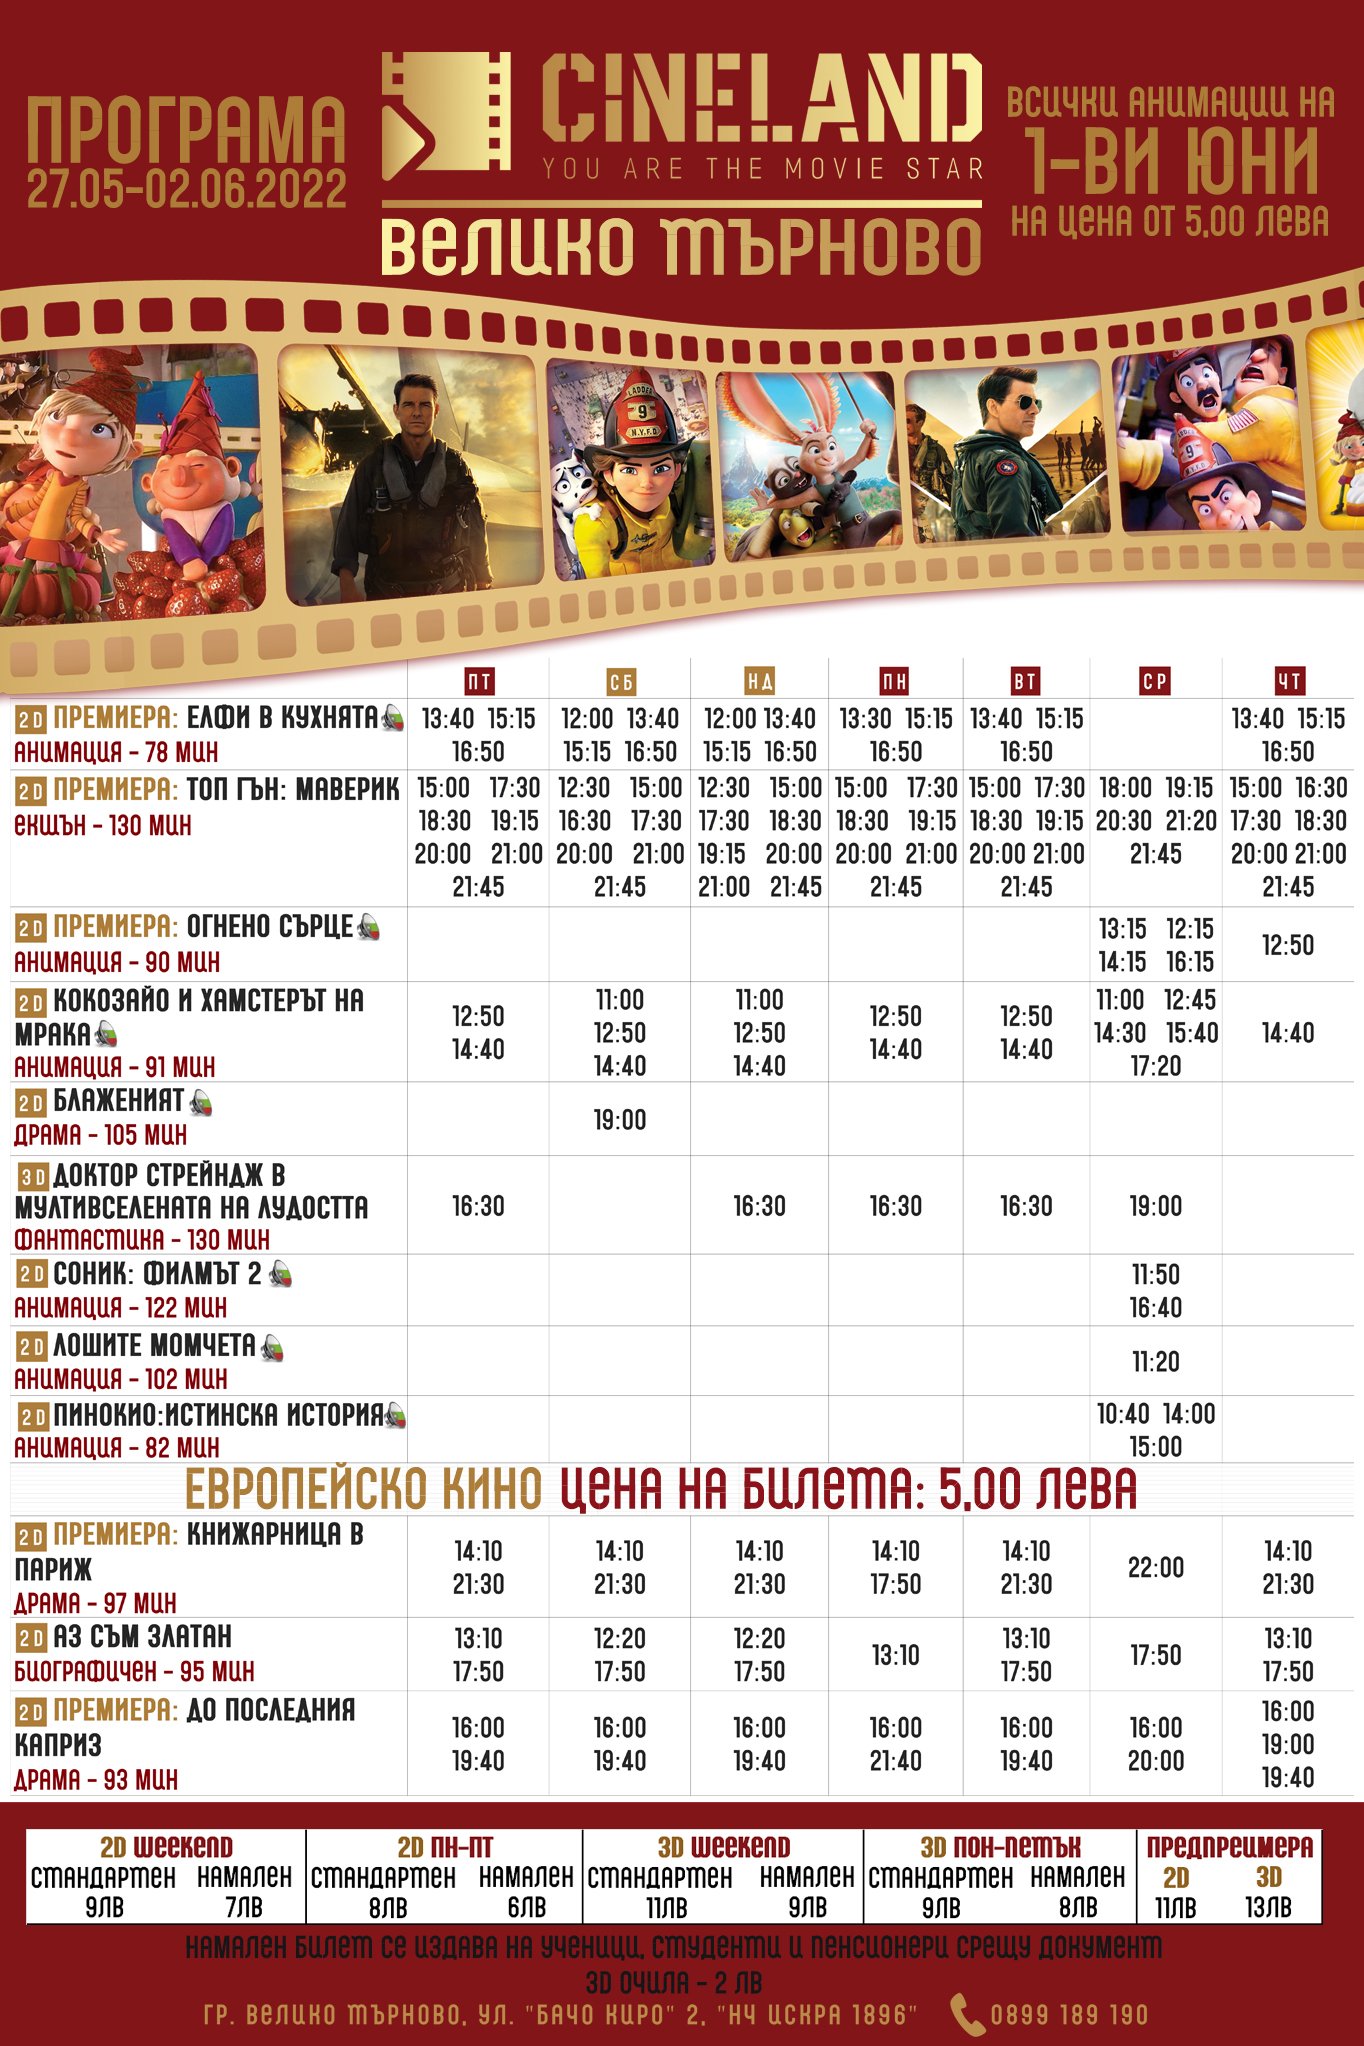 Cineland Велико Търново: Кино програма - 27.05-02.06.2022